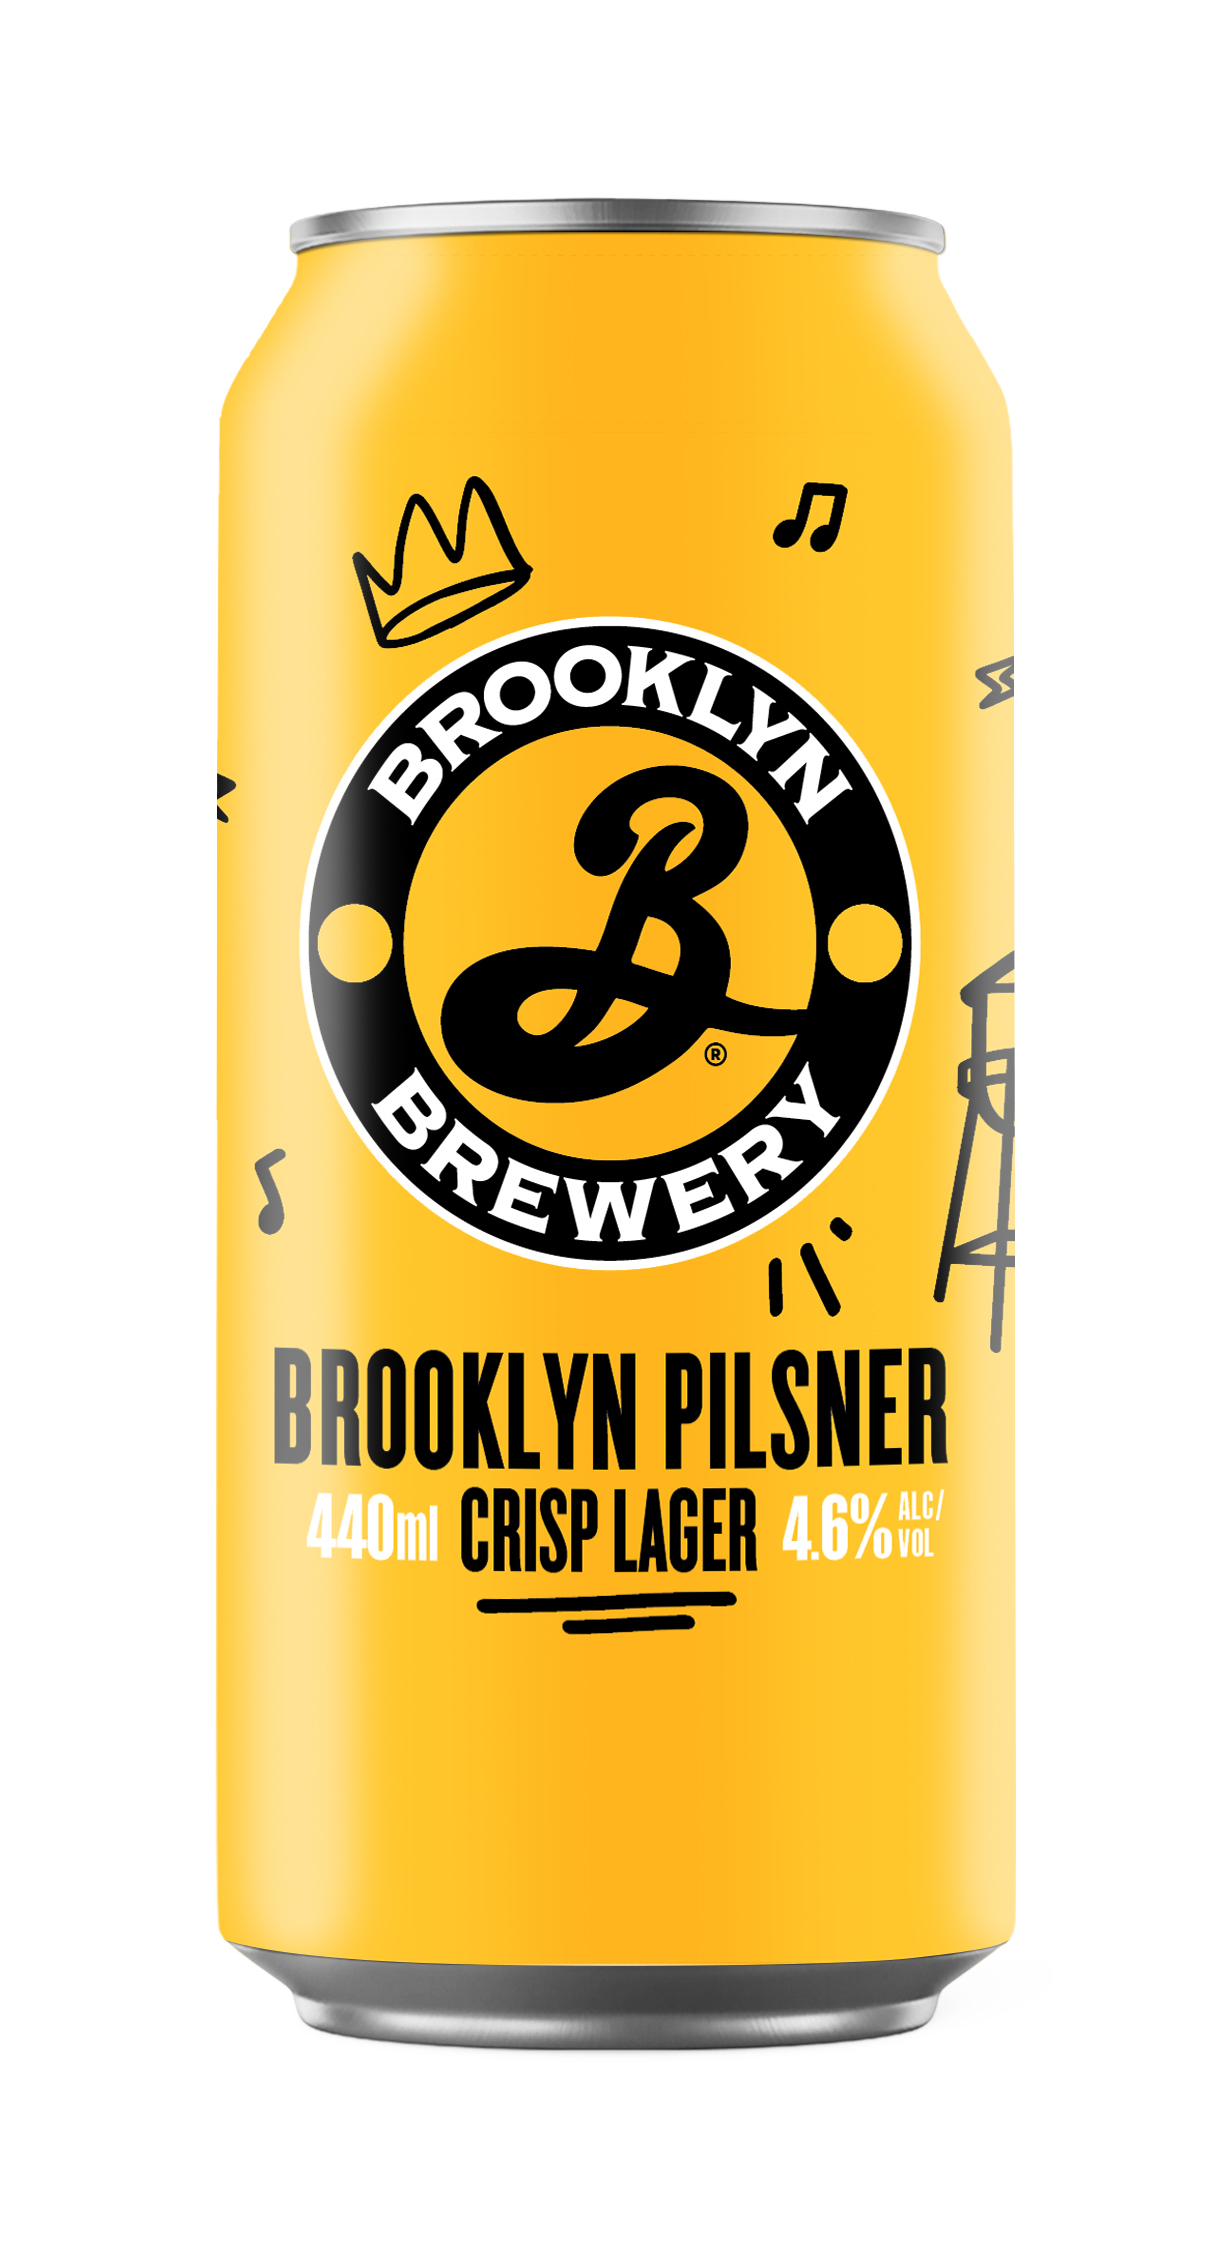 Brooklyn Pilsner declared official beer of Glastonbury